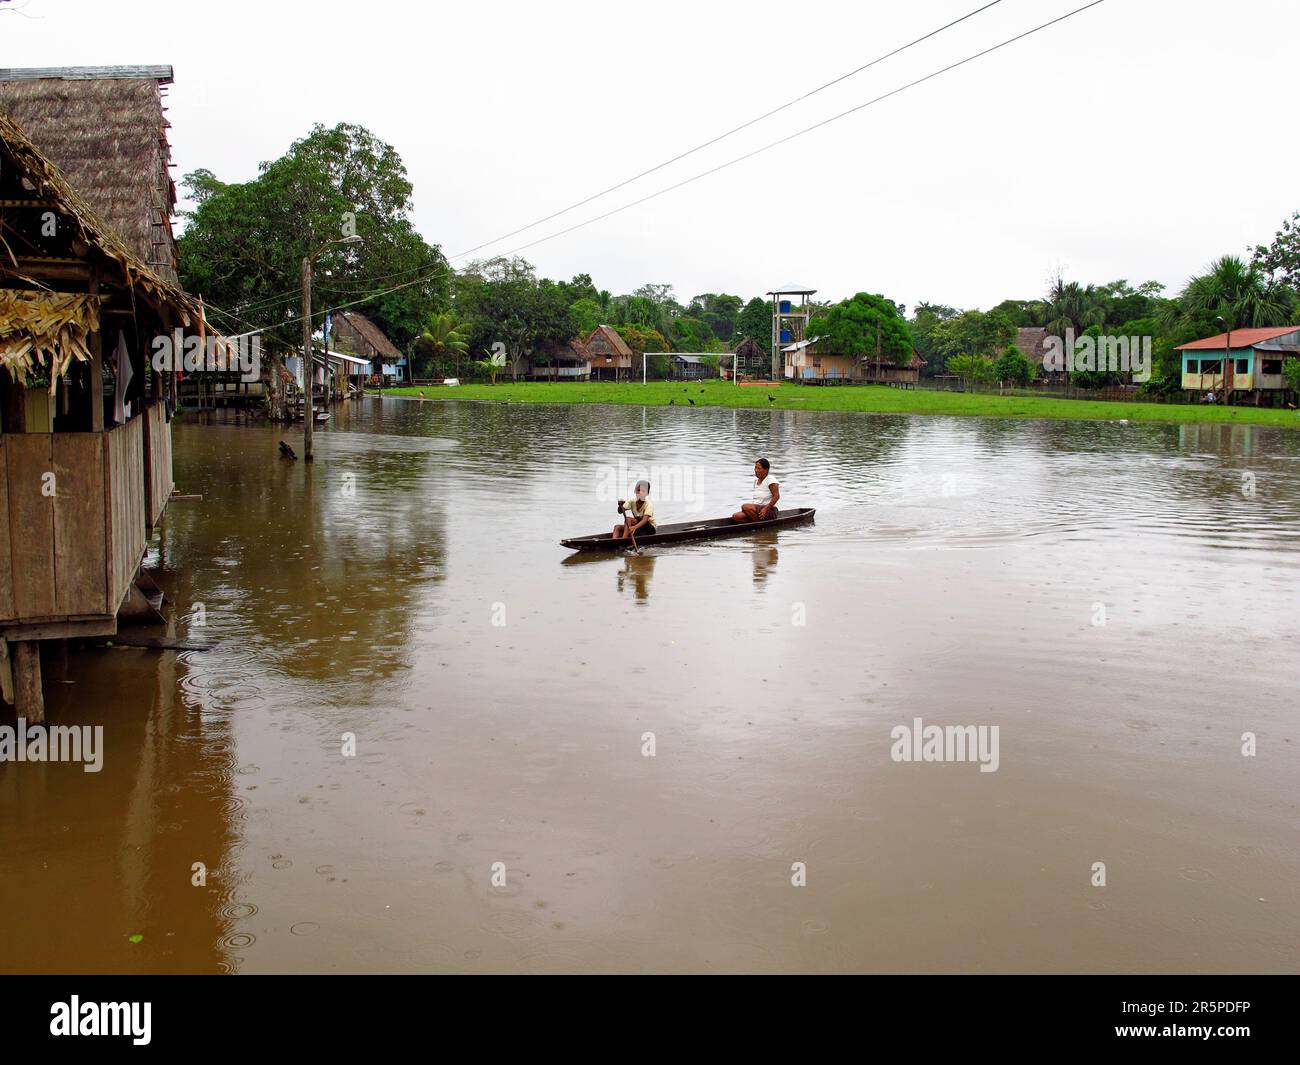 The boat in Amazon river in Peru, South America Stock Photo